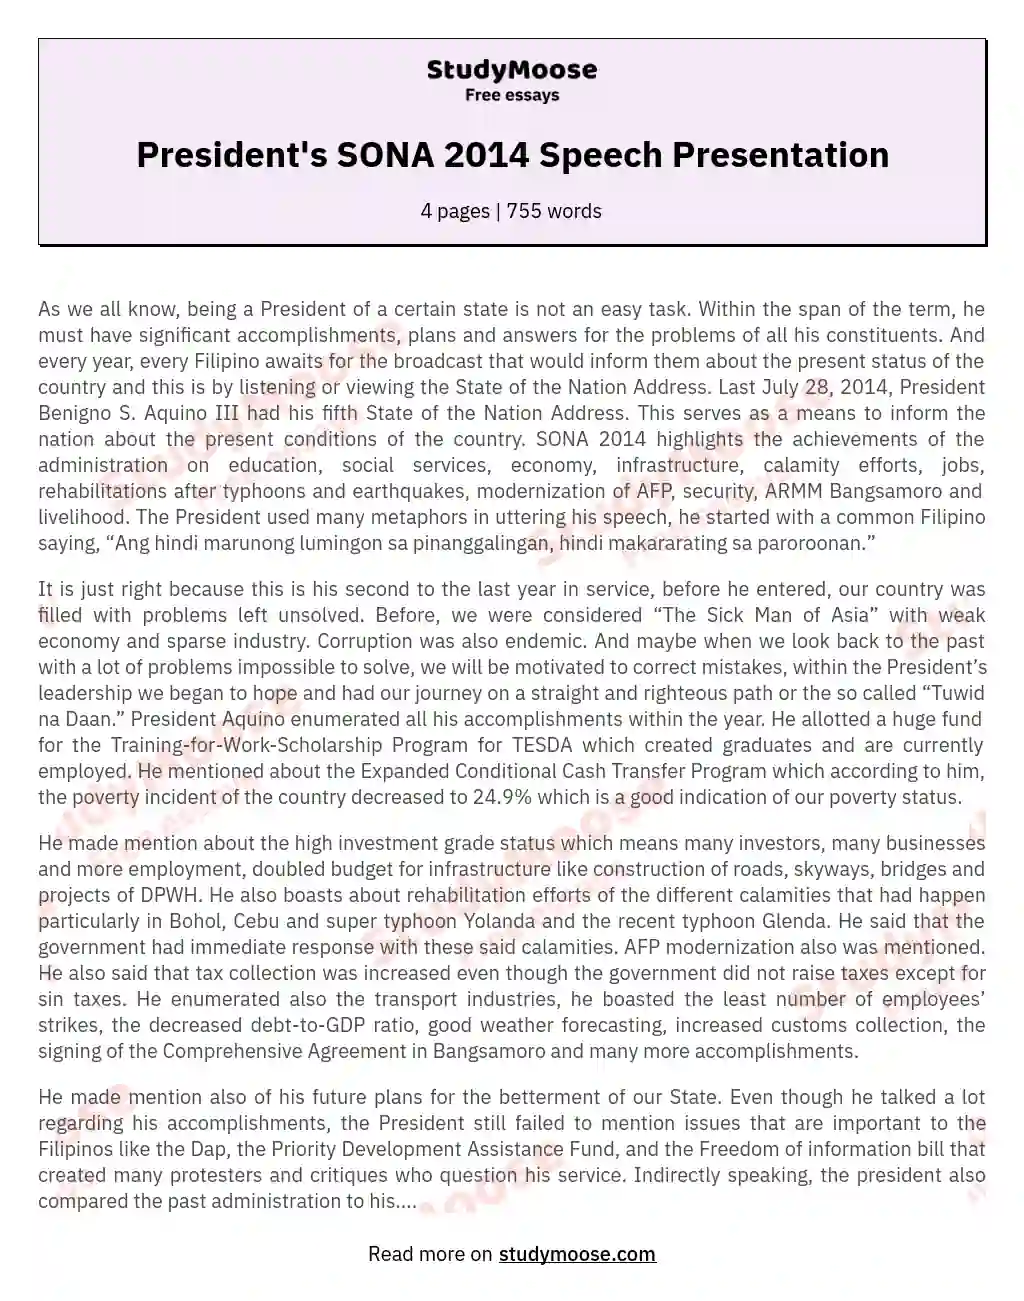 President's SONA 2014 Speech Presentation essay